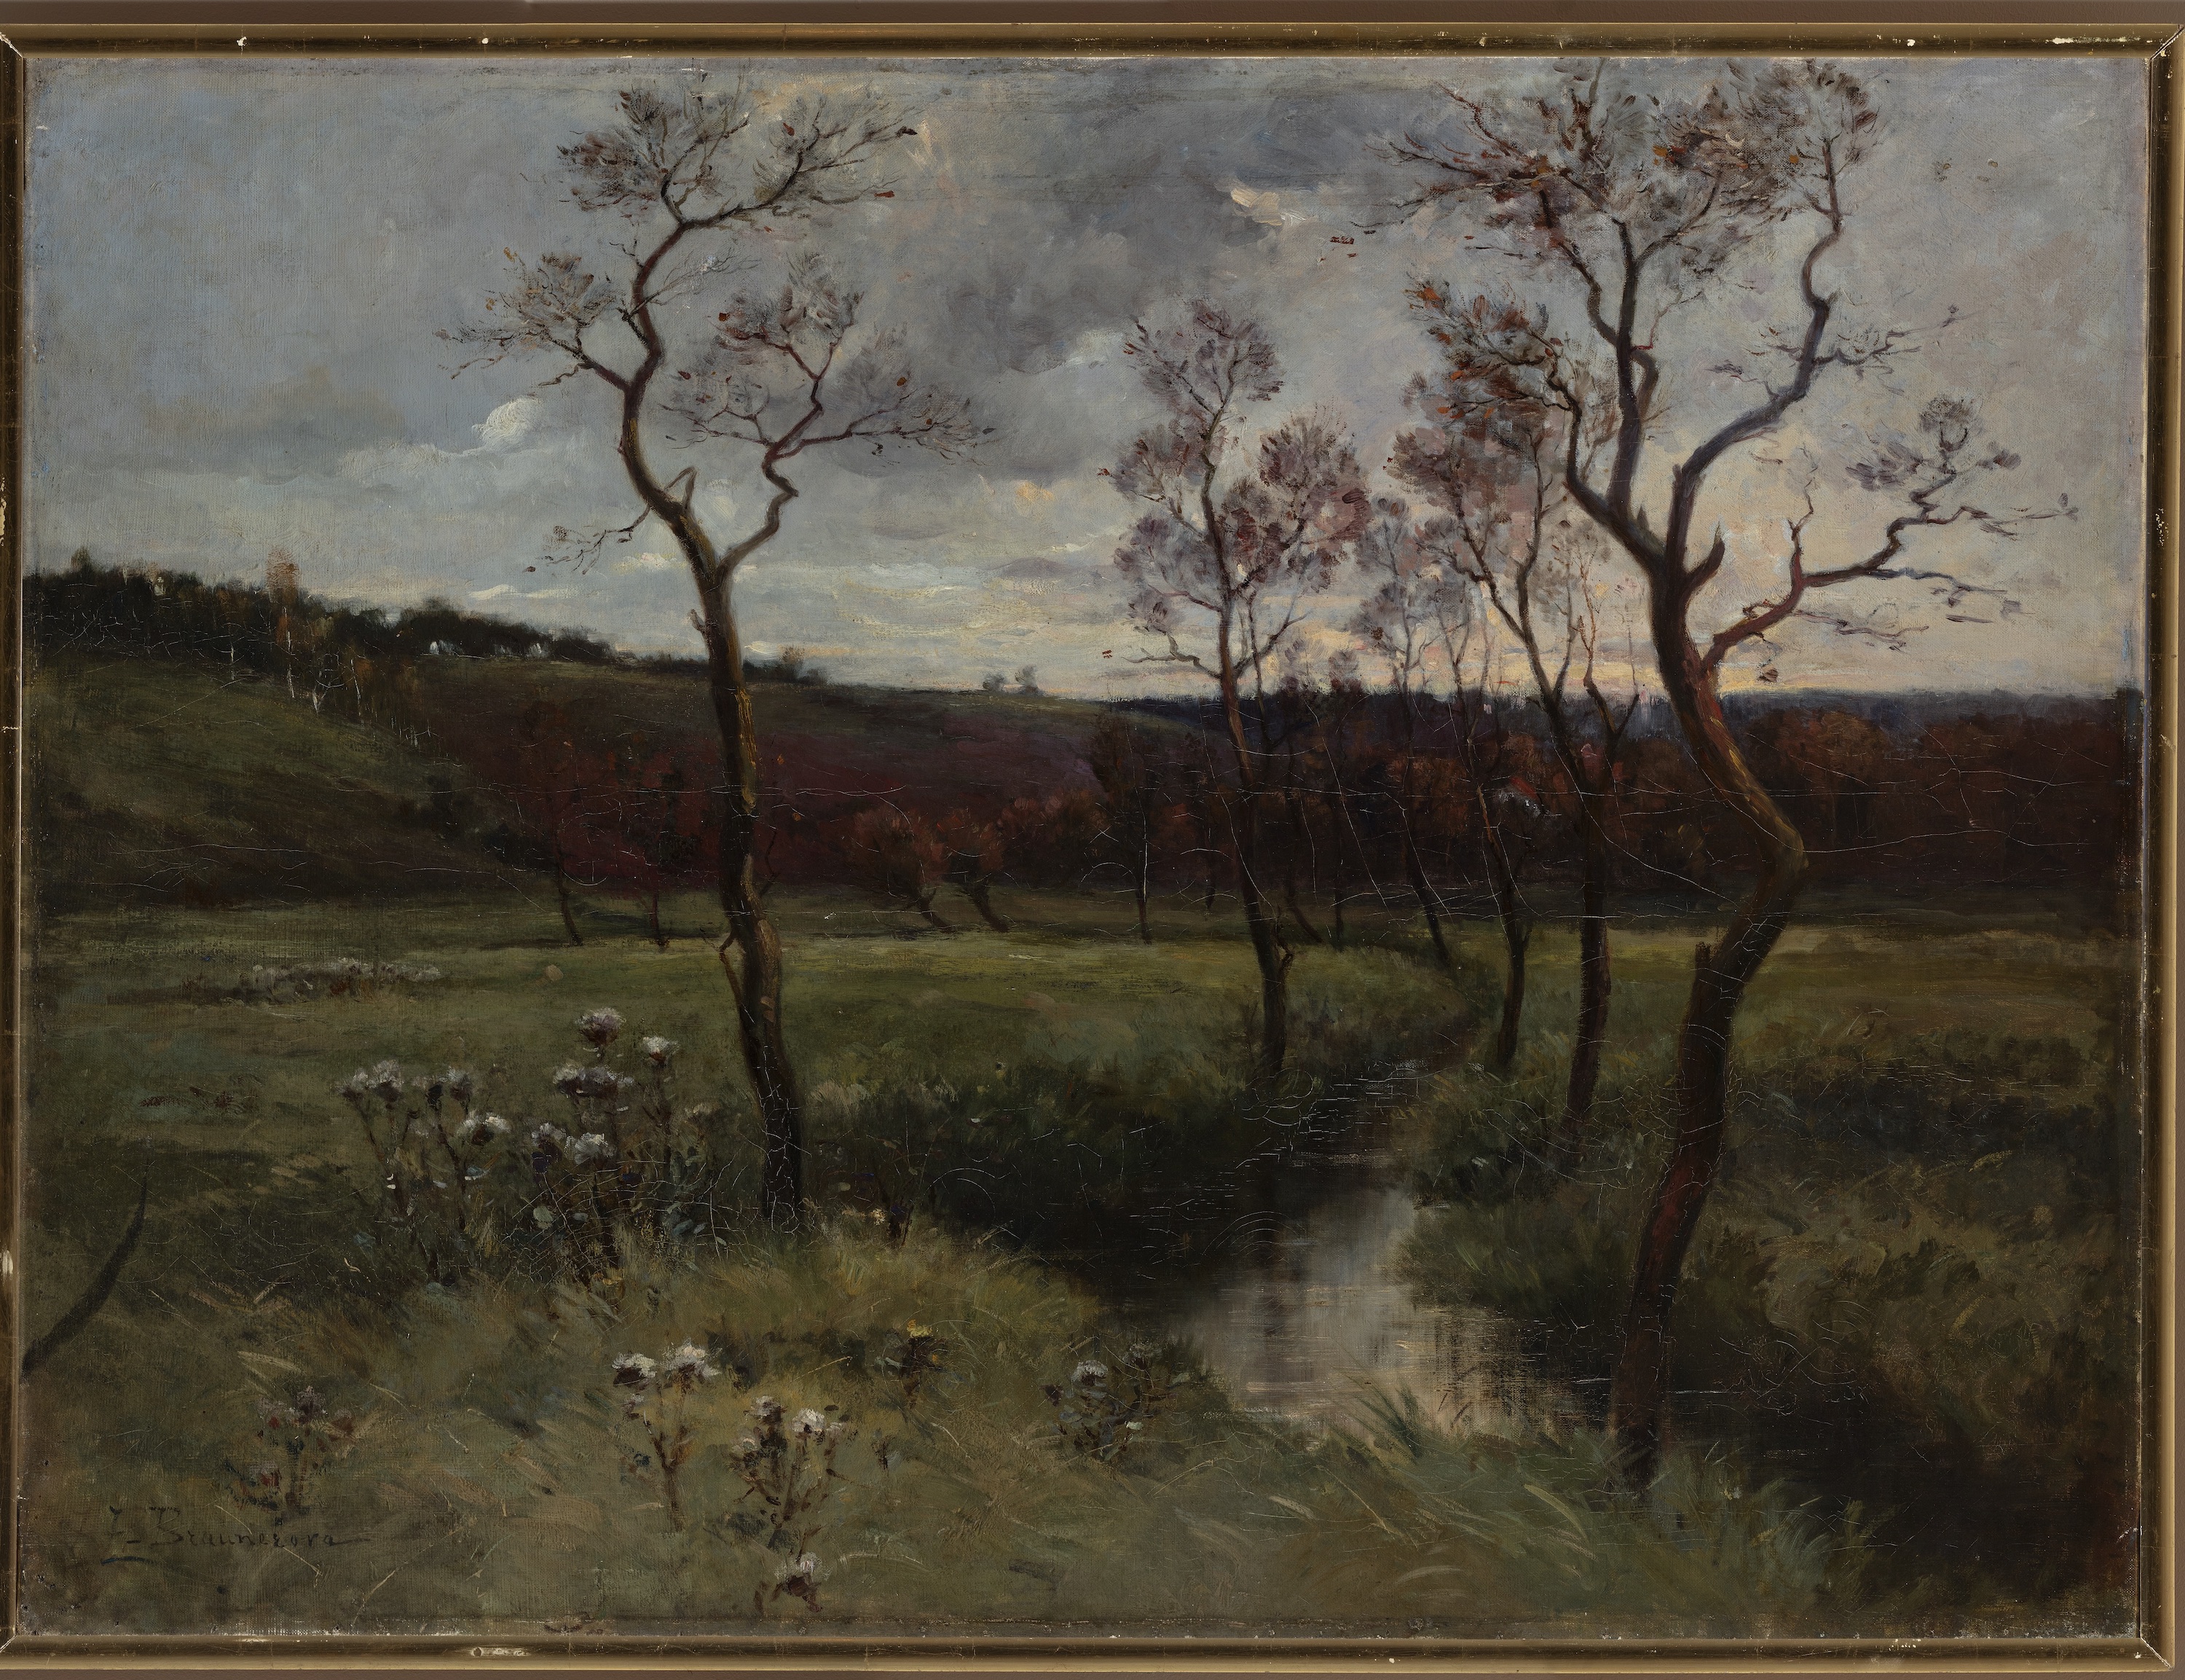 Csendes völgy Roztokynál by Zdenka Braunerová - kb 1886 - 83 x 110 cm 